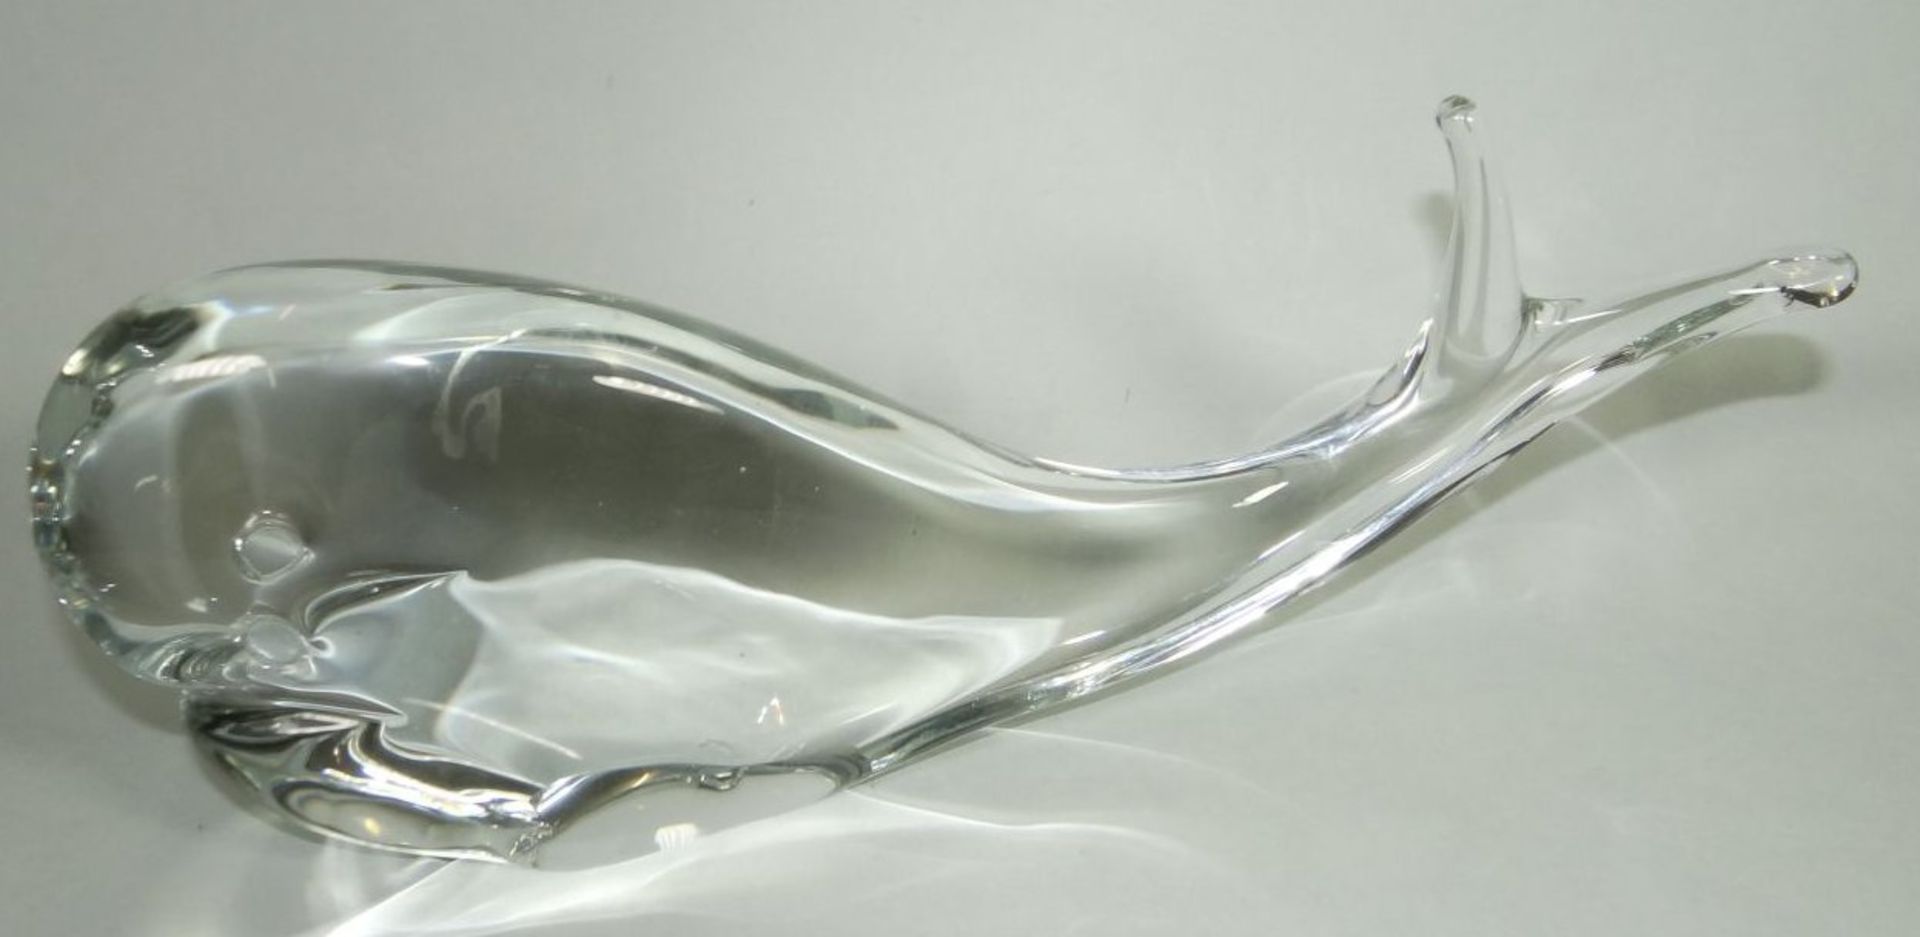 grosses Glasobjekt "Wal" Ritzsignatur, Sweden, H-13 cm, L-30 cm- - -22.61 % buyer's premium on the